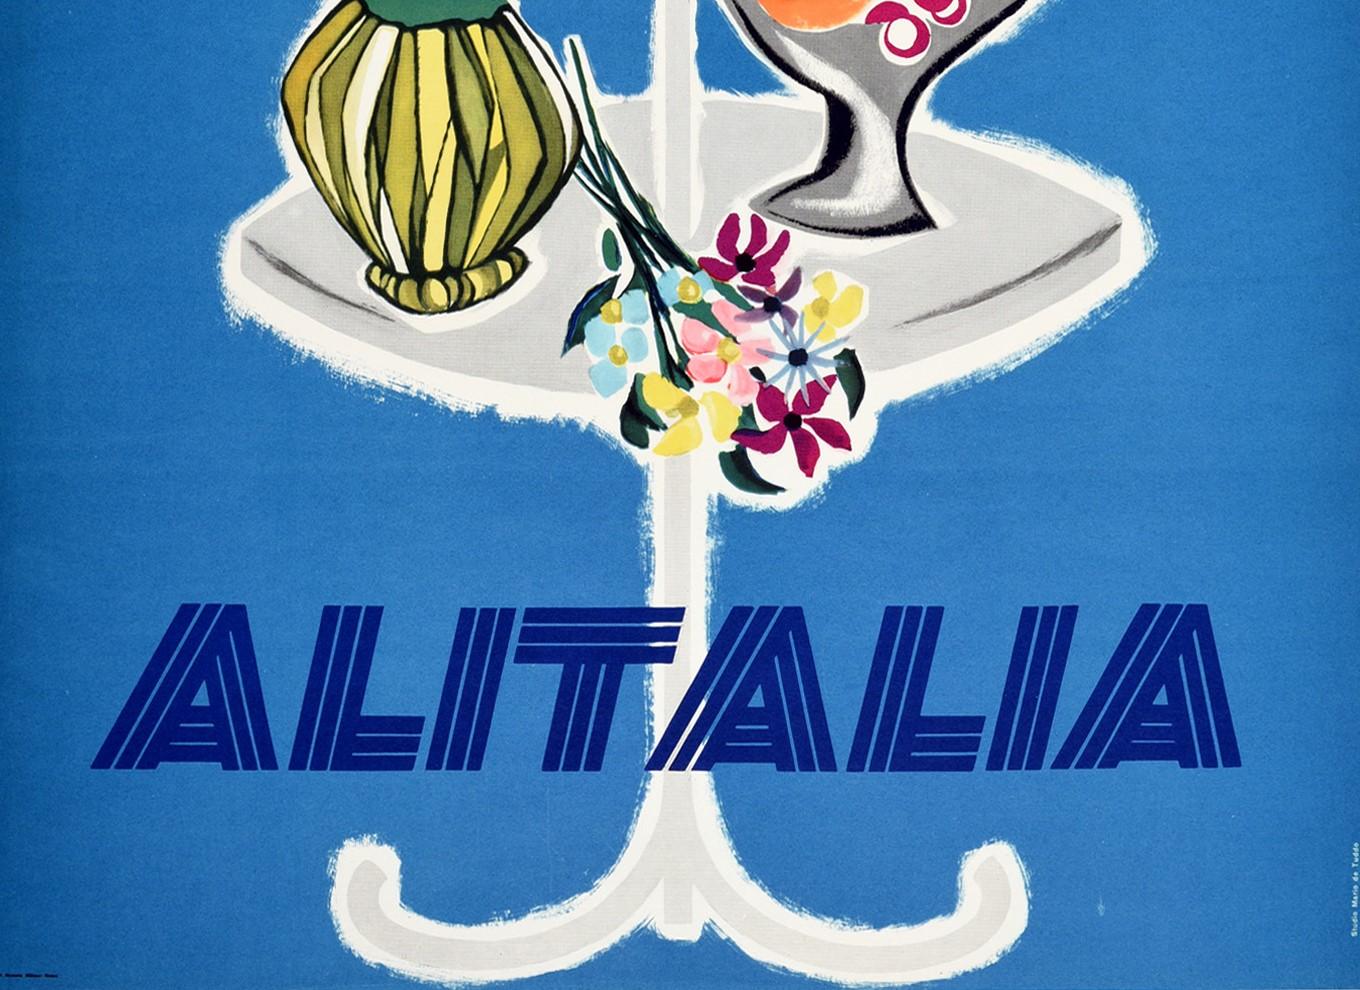 alitalia vintage poster